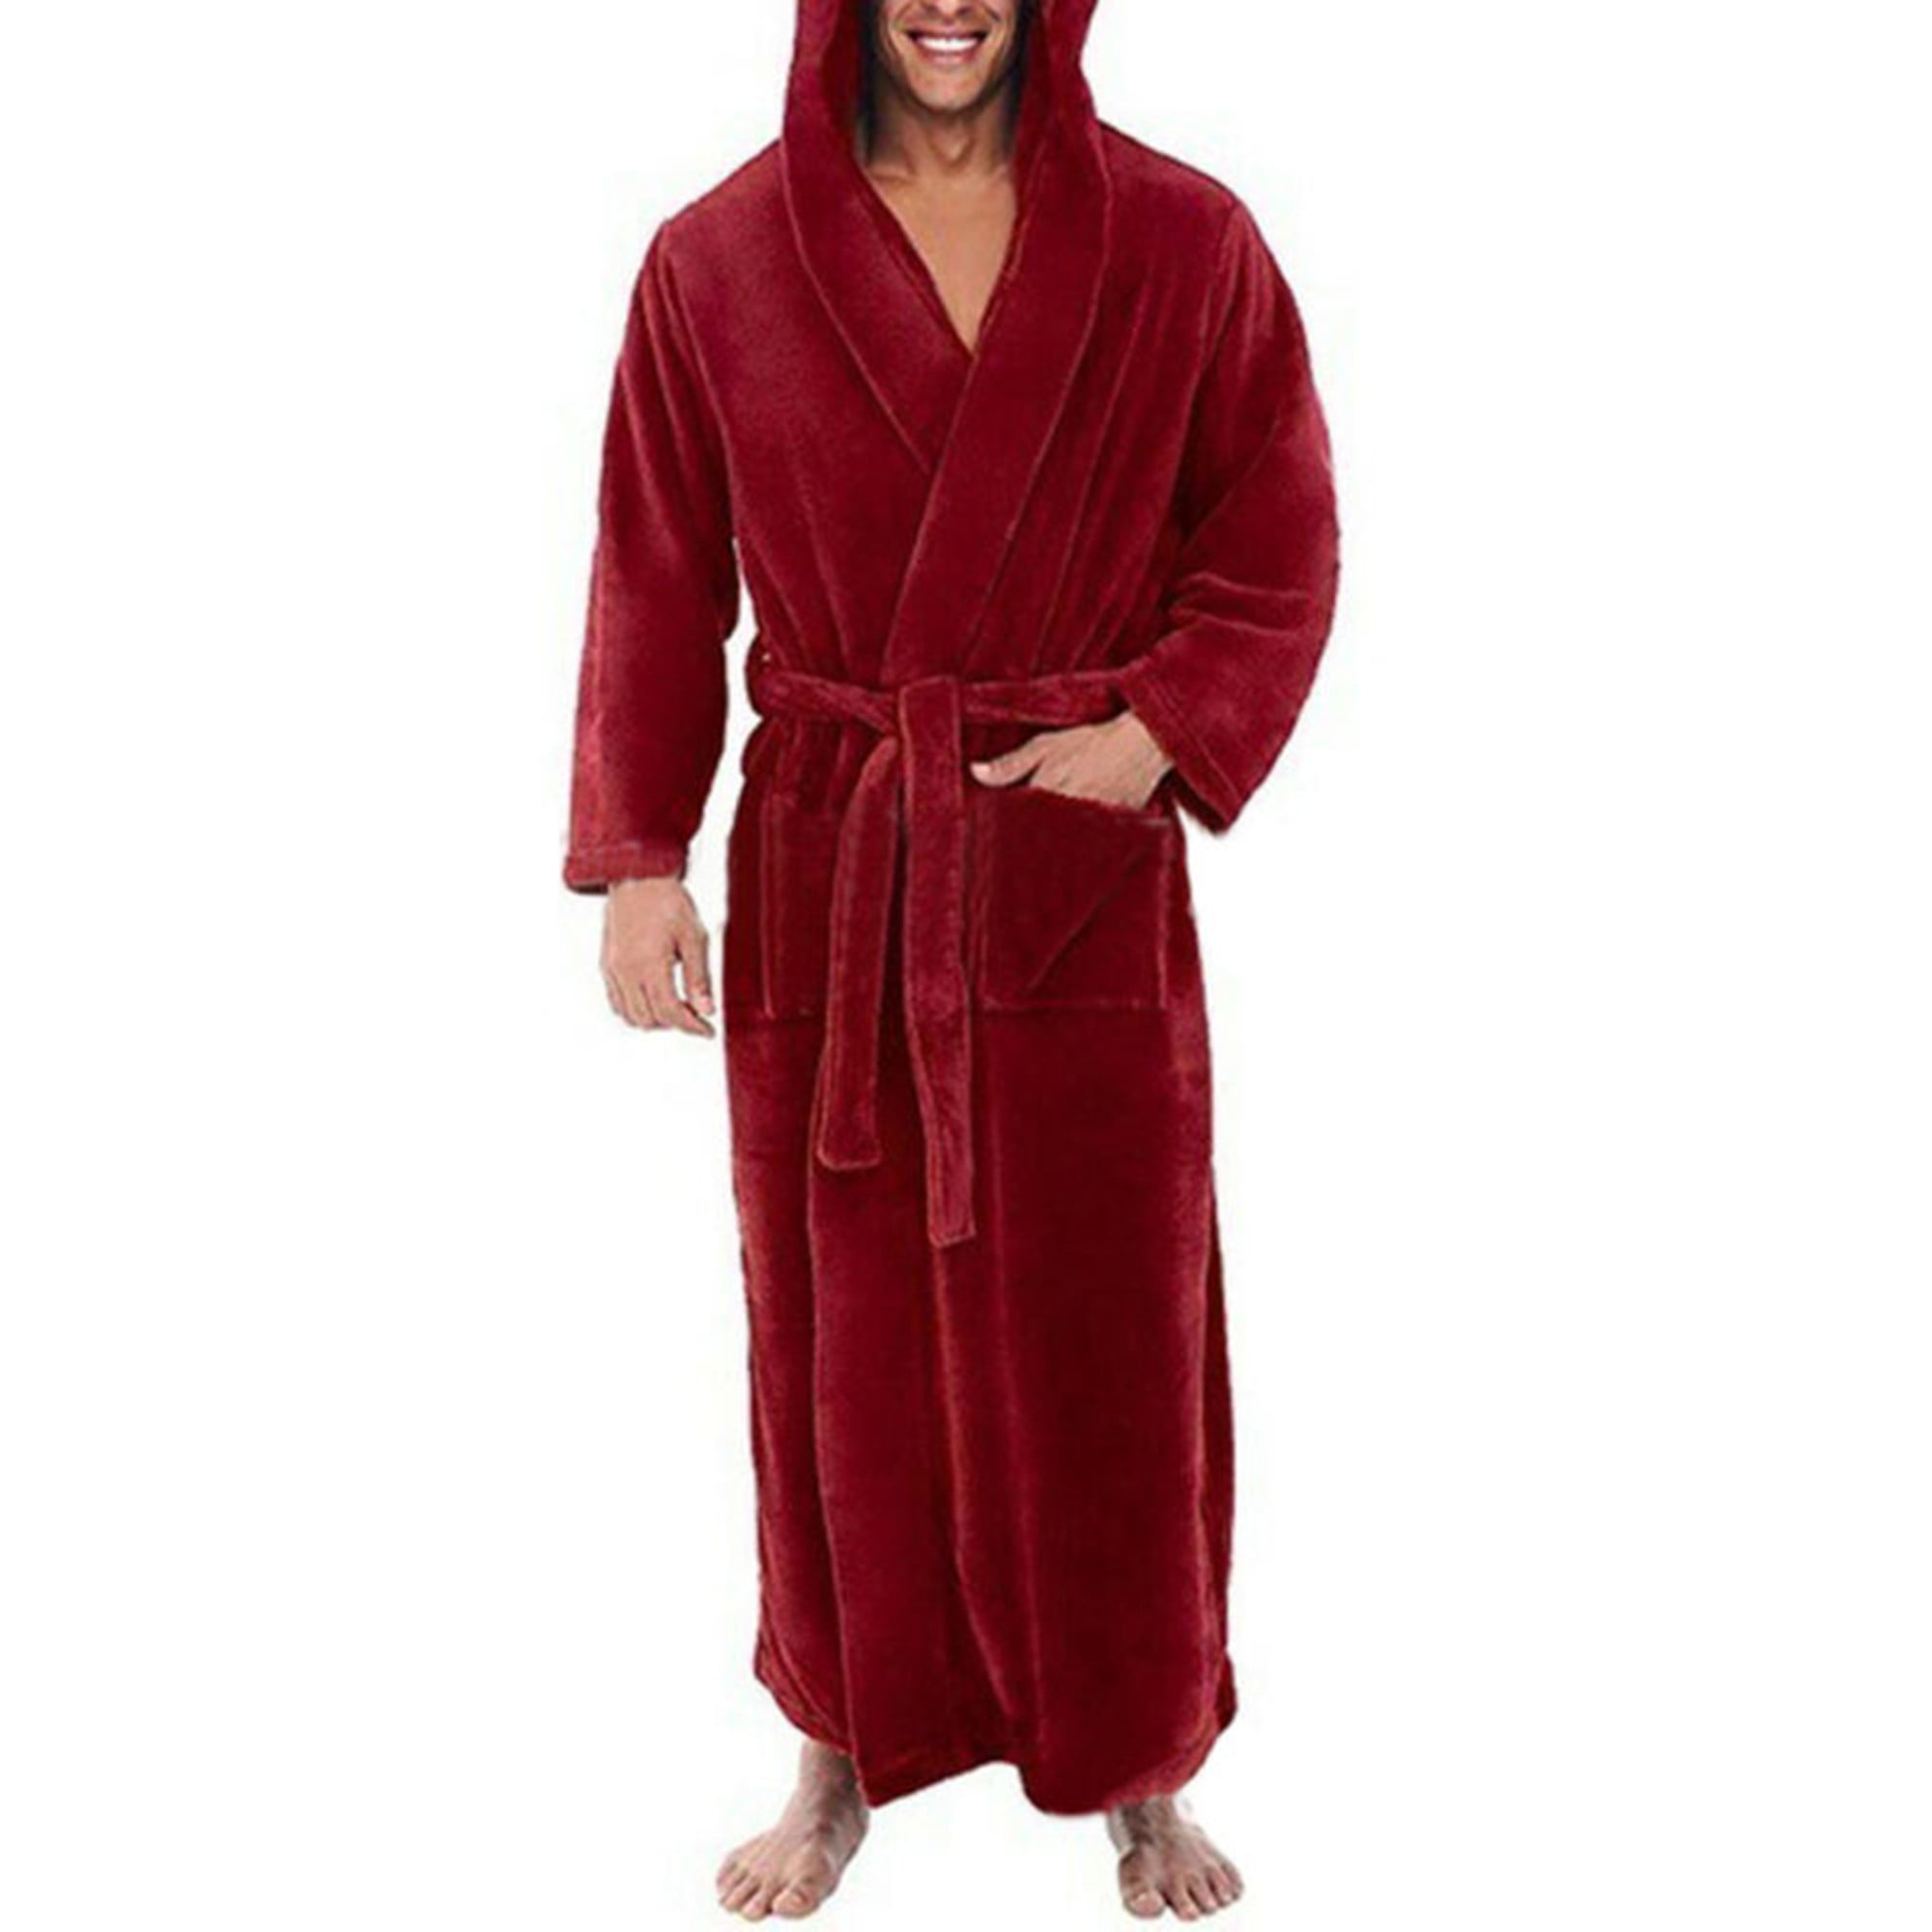 Details about   Womens Long Hooded Bathrobe Fleece Full Length Bathrobe with Hood Winter Sleepwe 